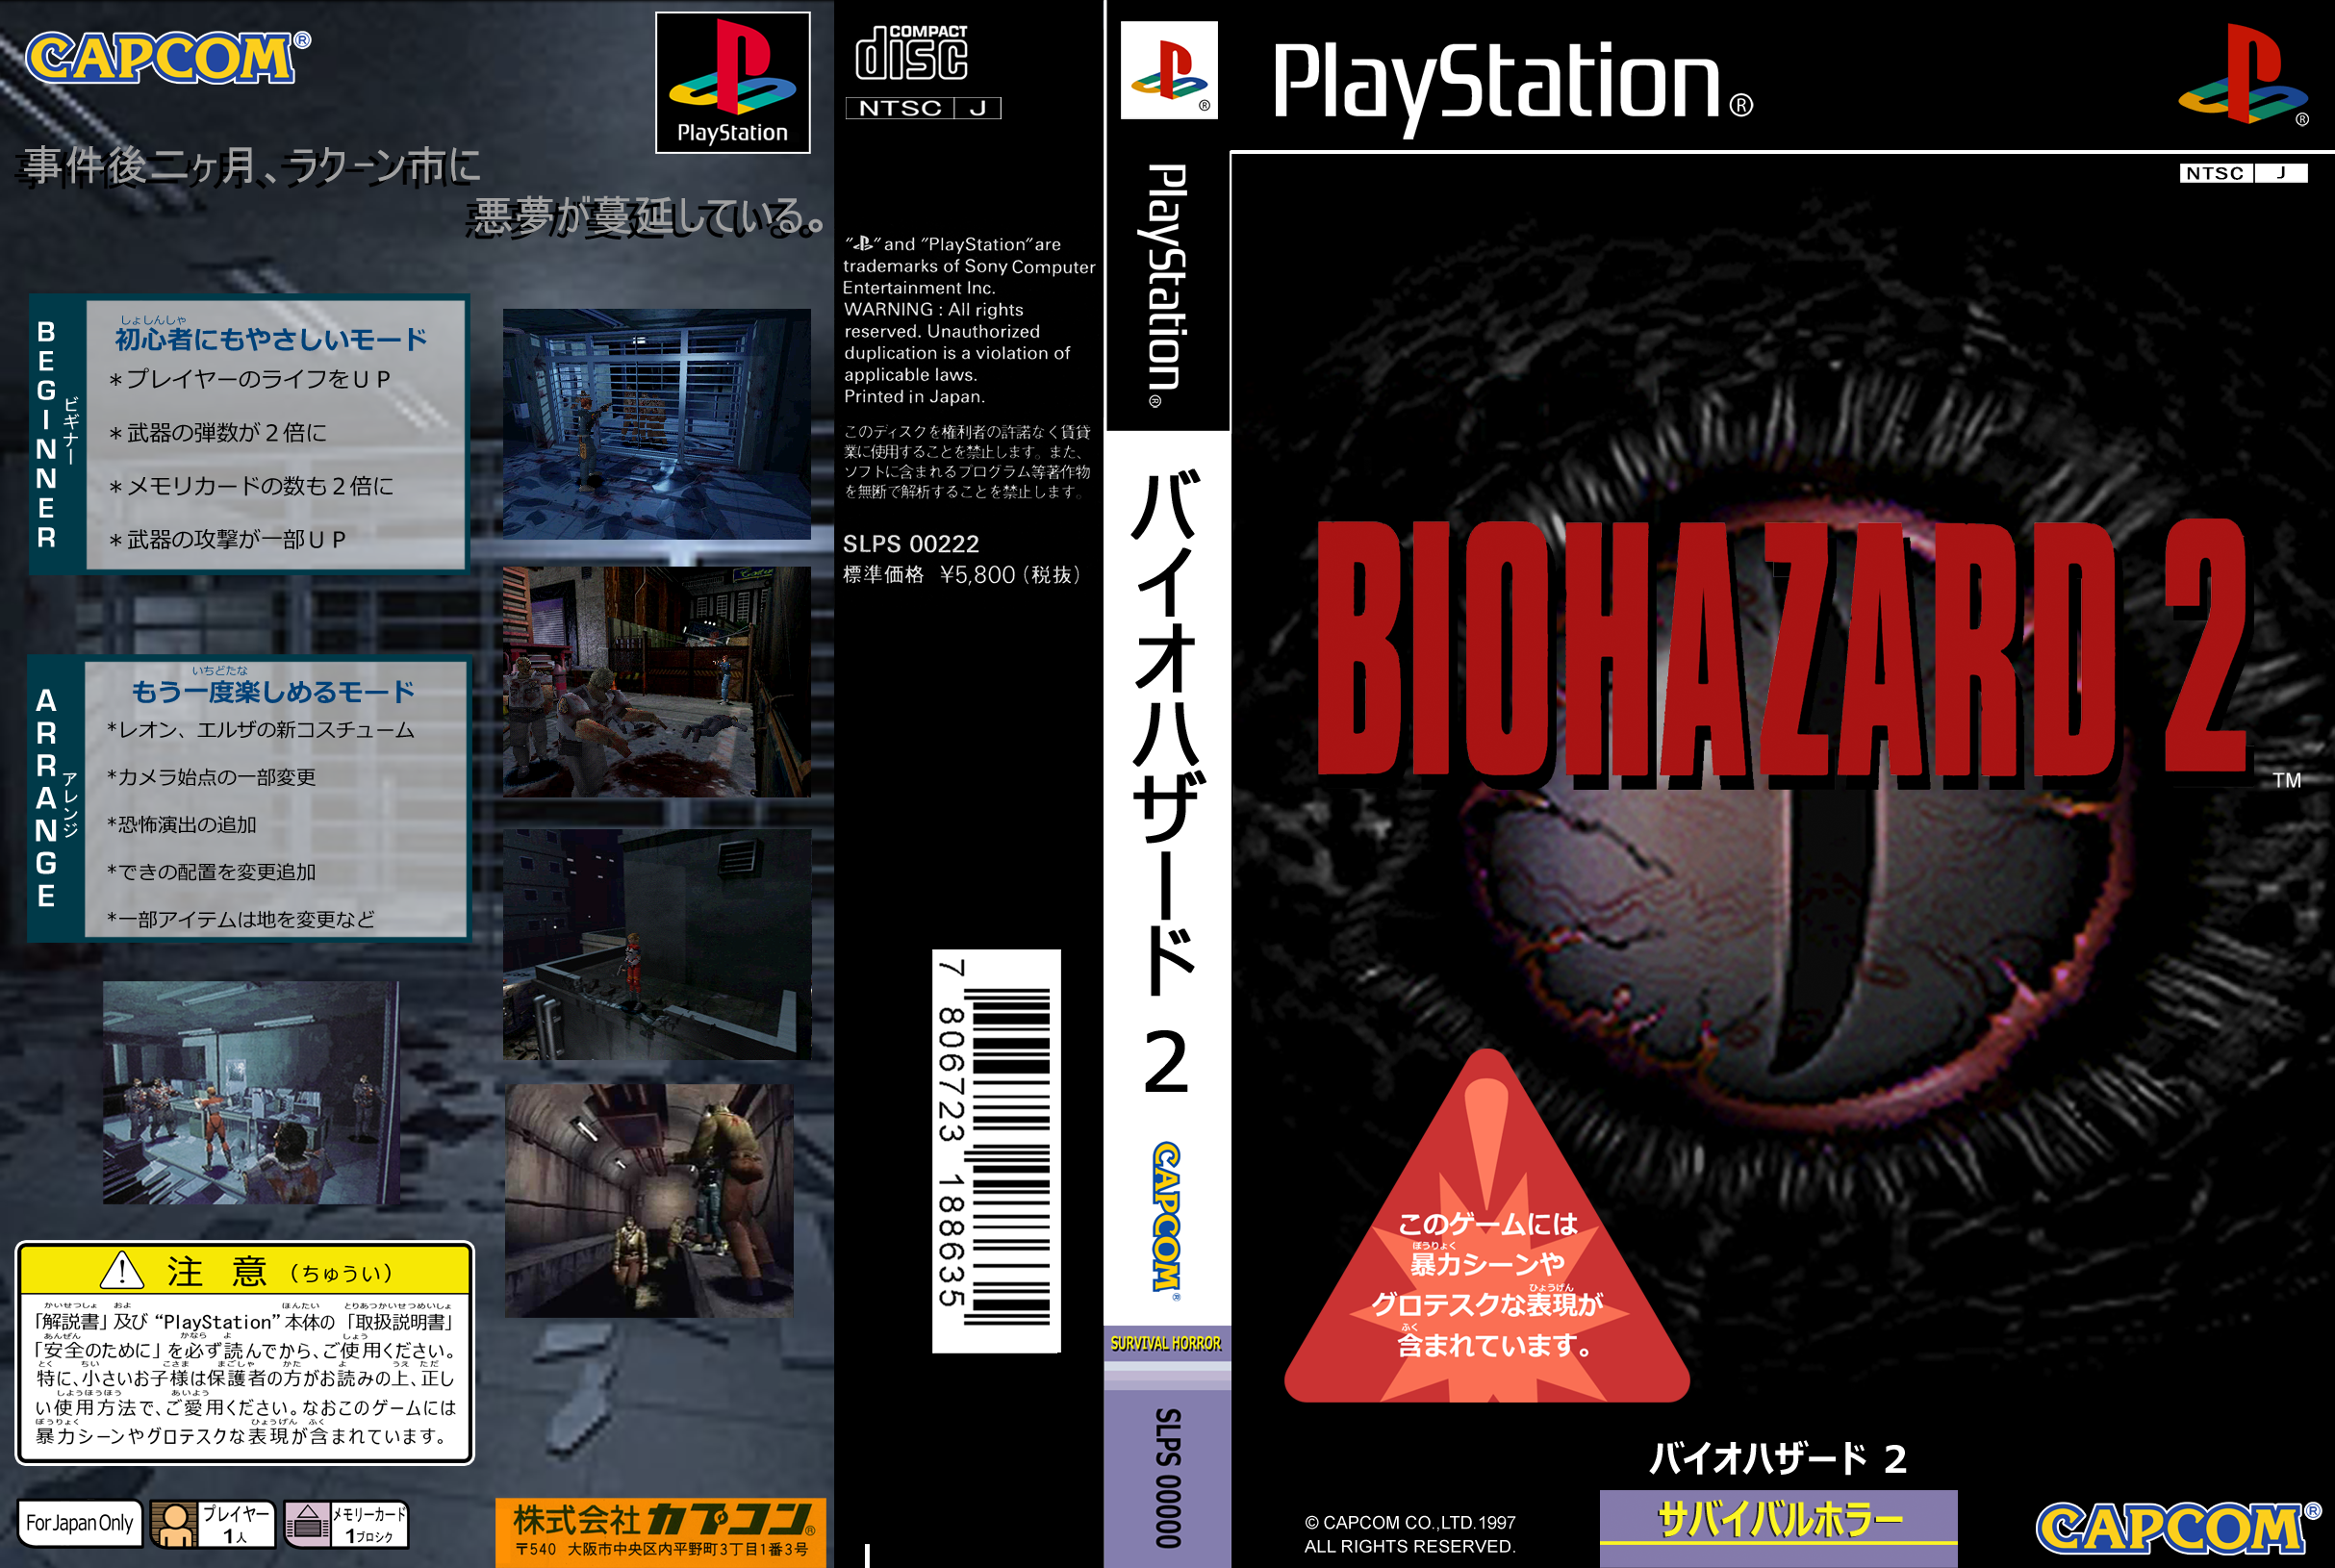 Biohazard 2 (Prototype) (DVD Case) box cover